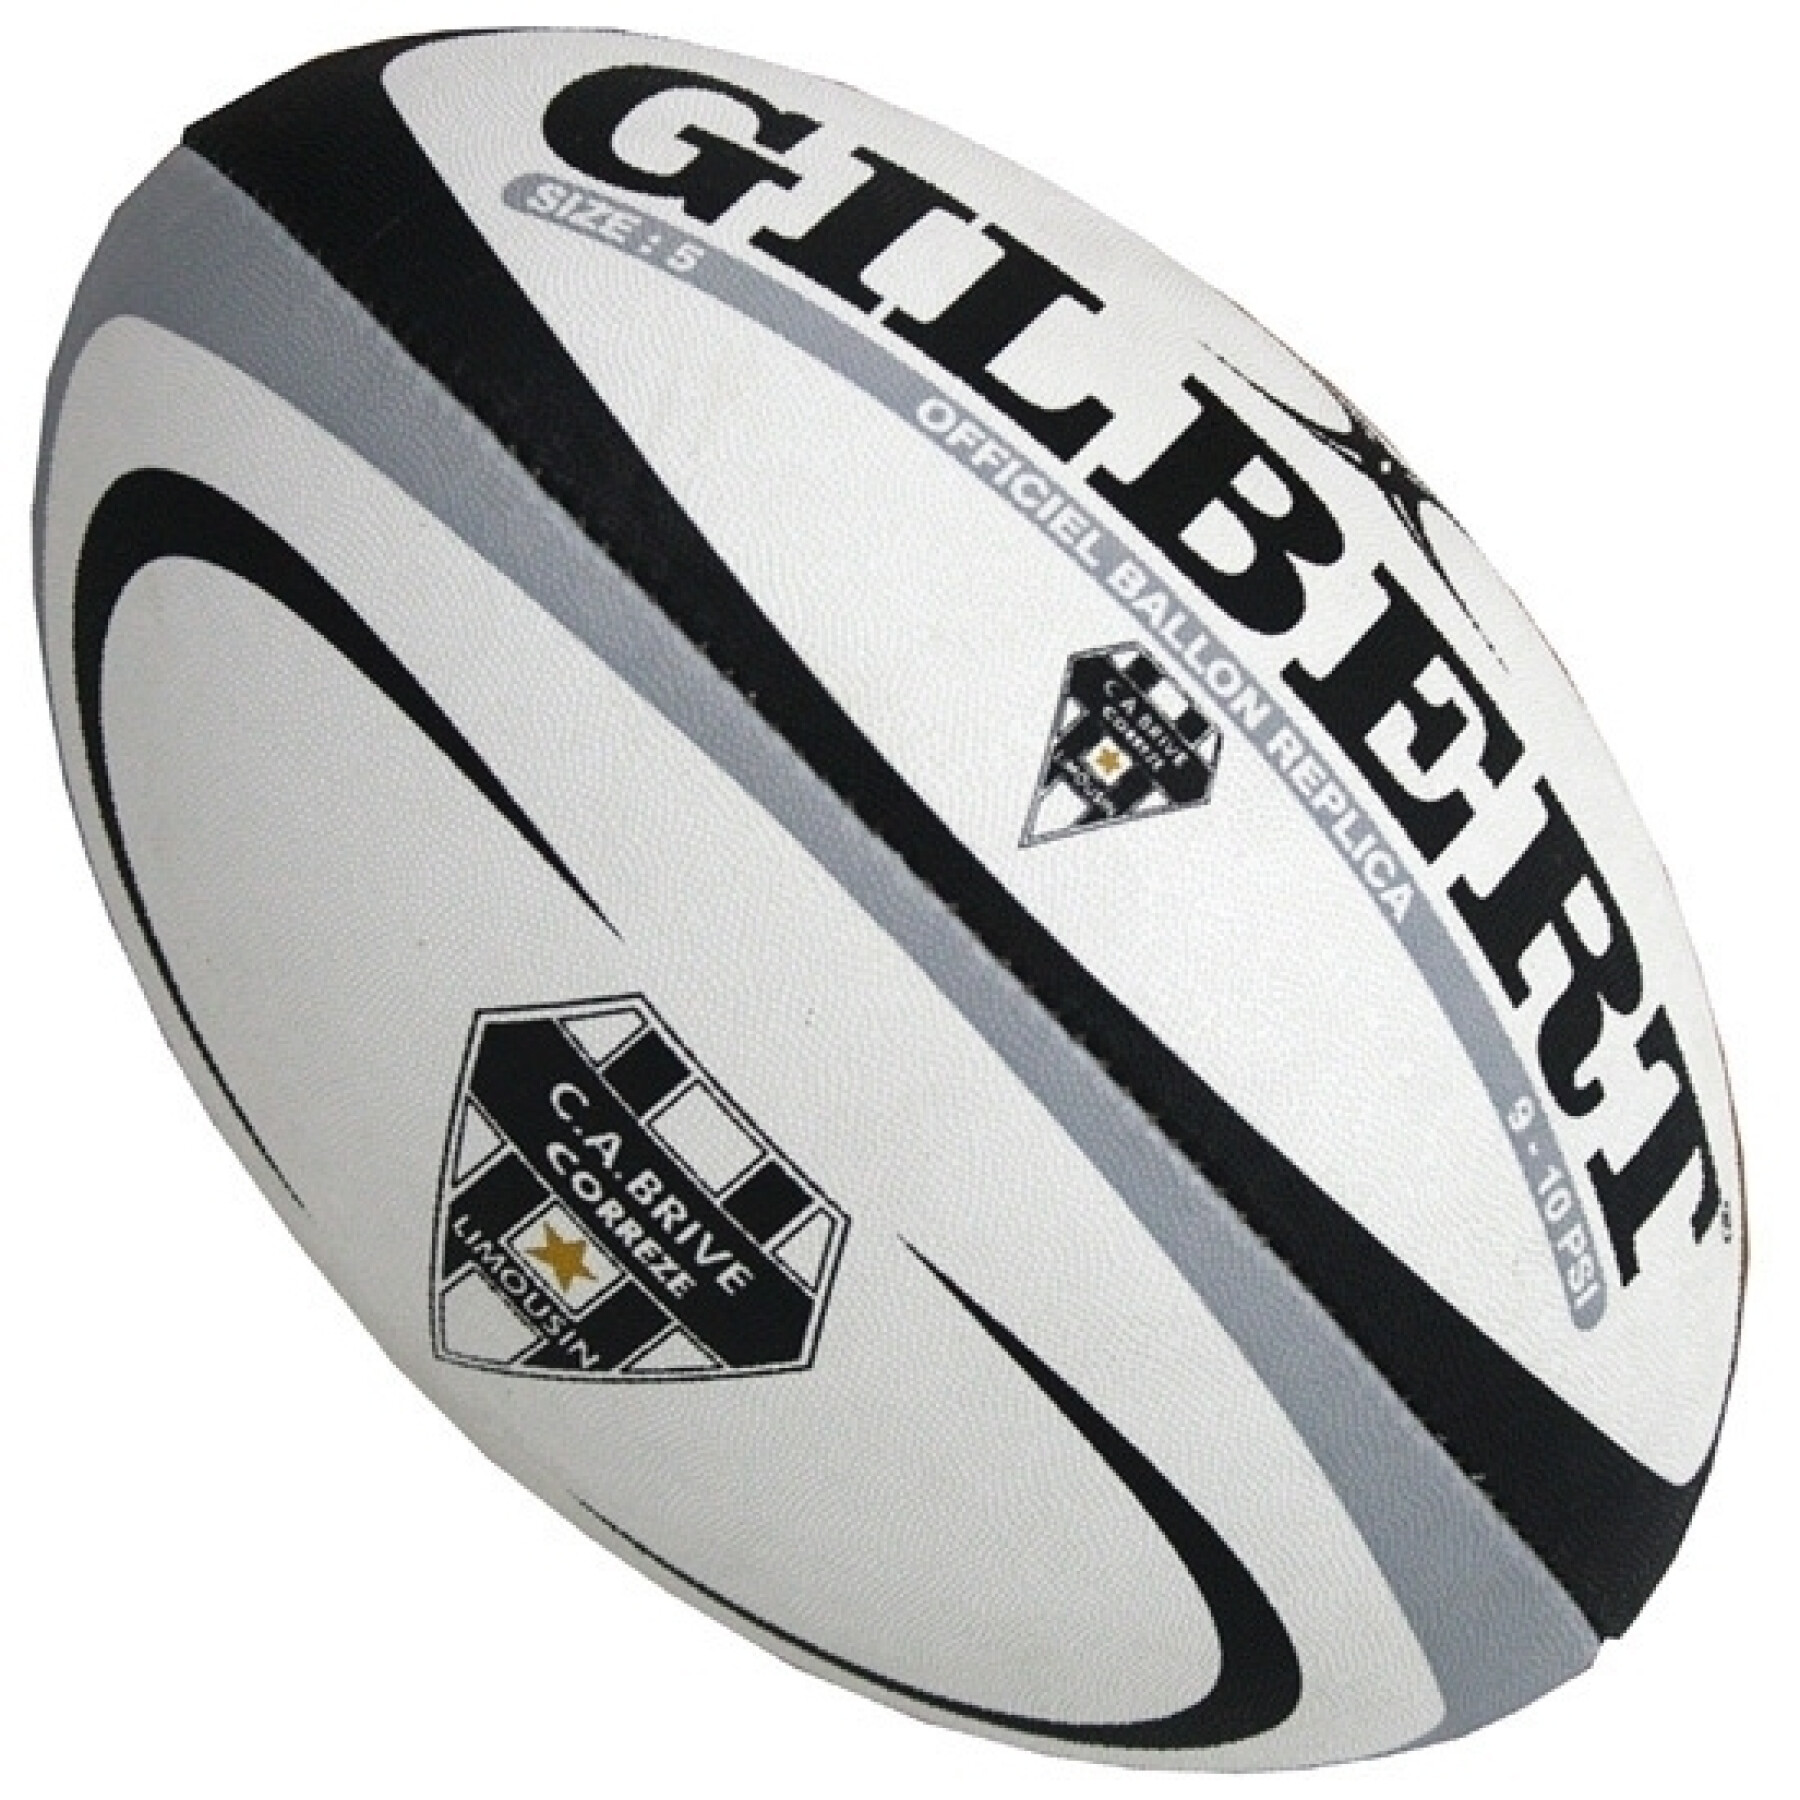 Rugbyball Gilbert CA Brive (Größe 5)